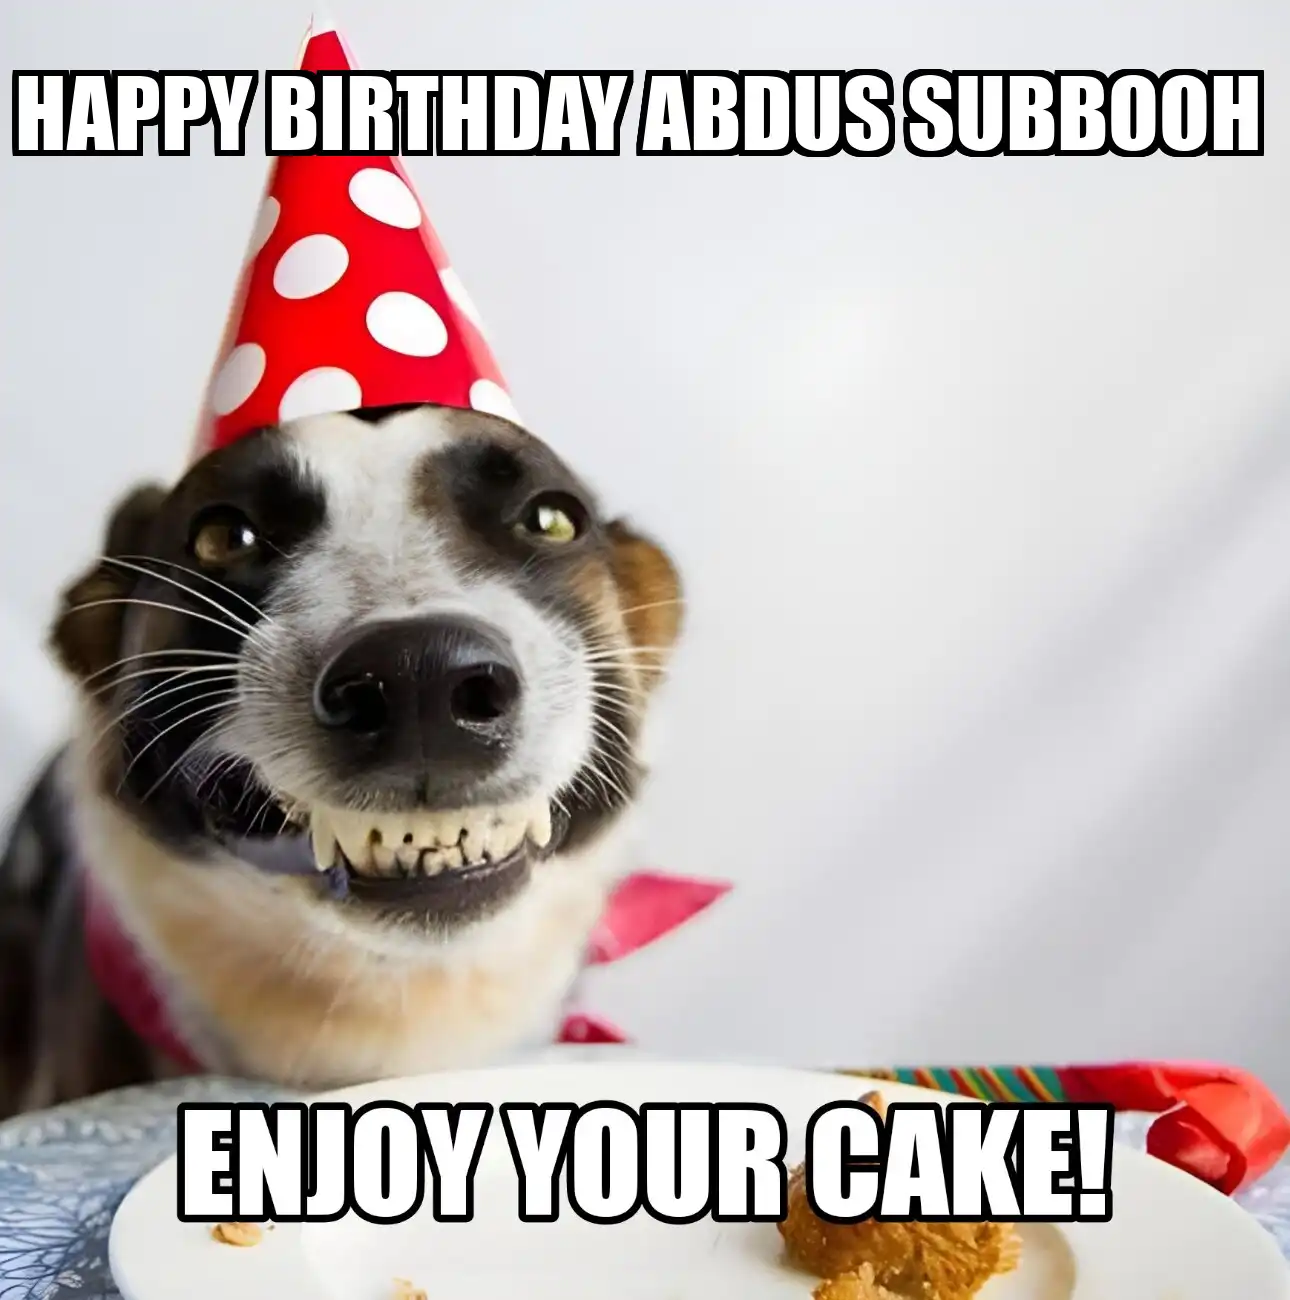 Happy Birthday Abdus Subbooh Enjoy Your Cake Dog Meme